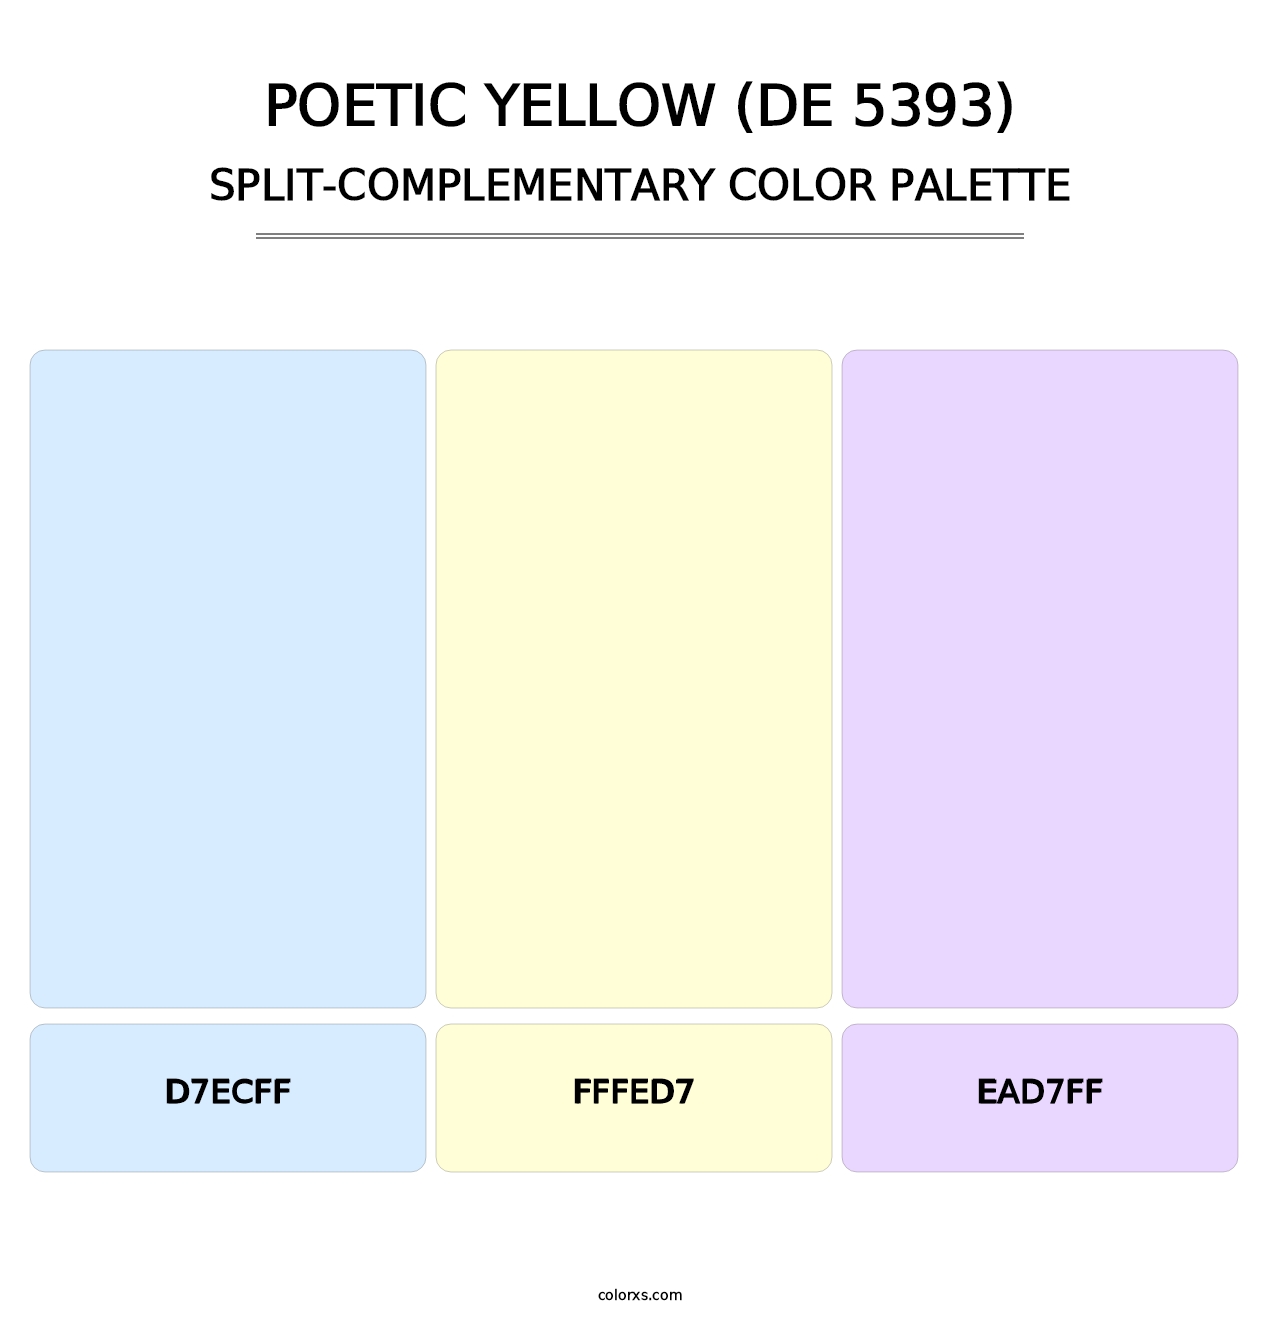 Poetic Yellow (DE 5393) - Split-Complementary Color Palette